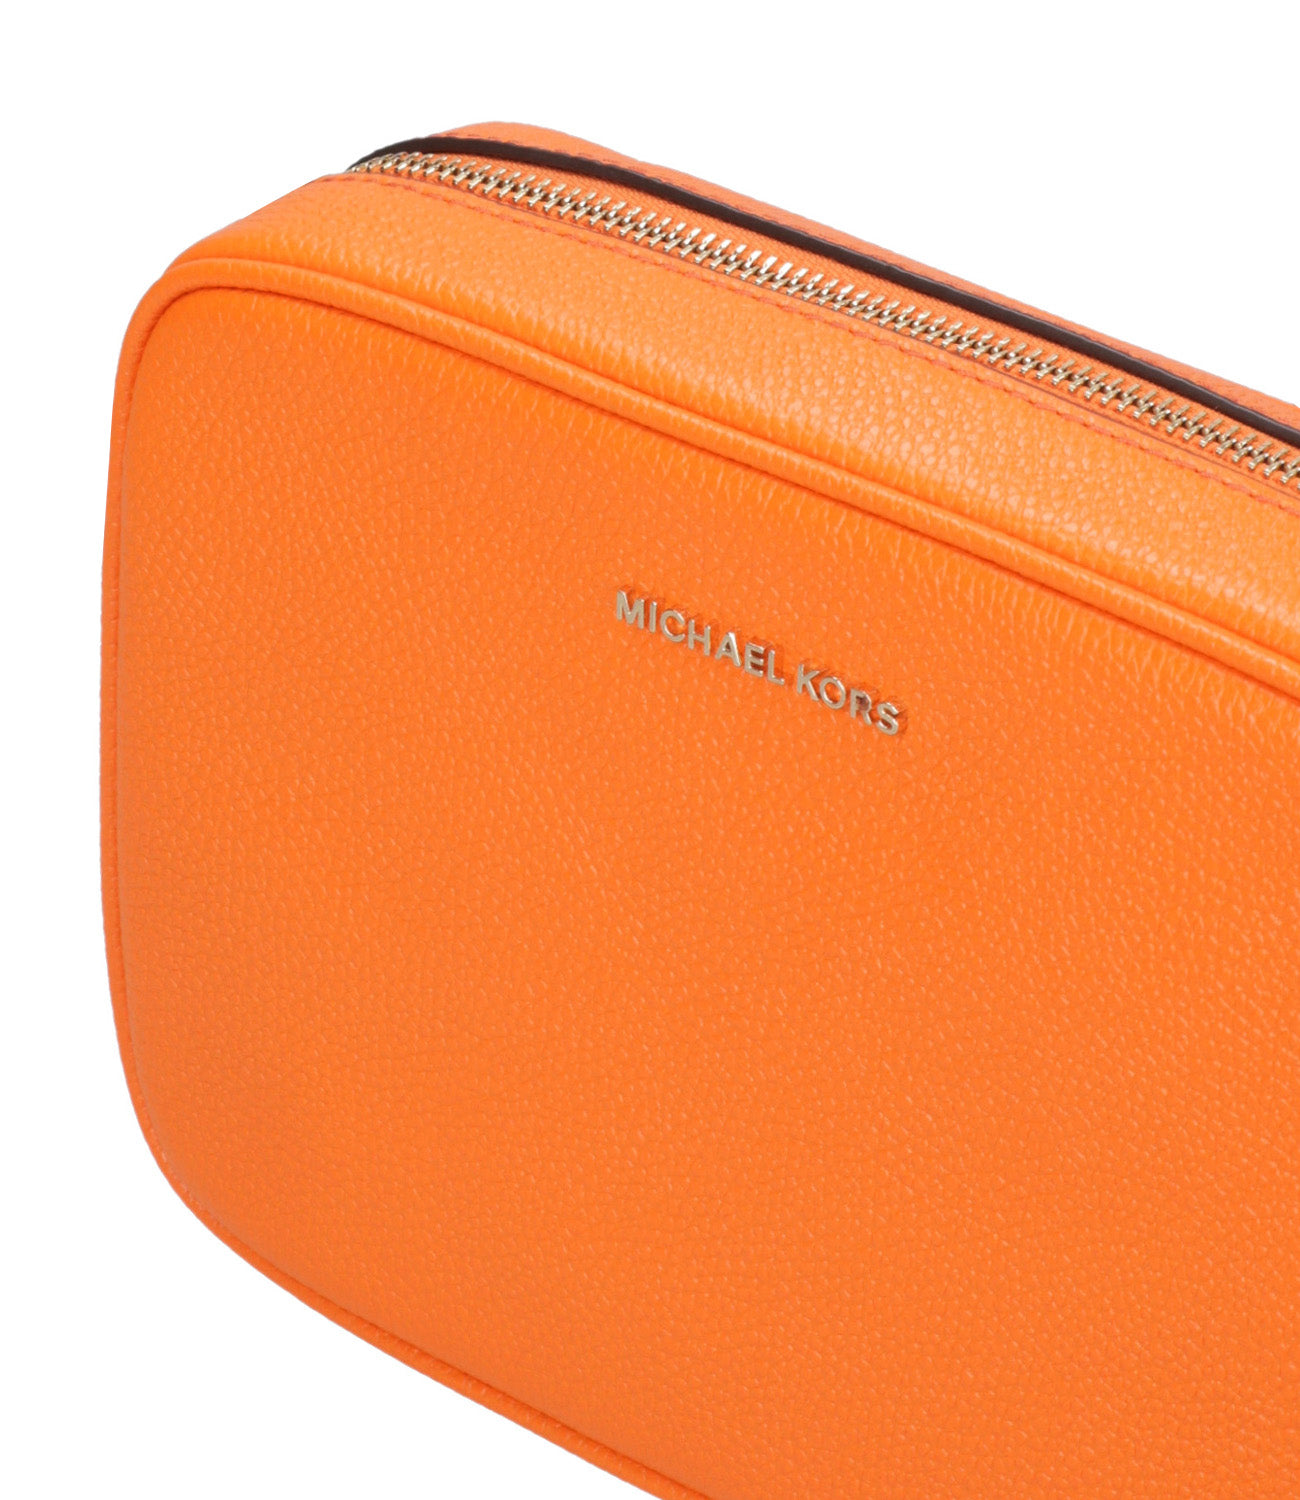 Michael Kors | Ginny Shoulder Bag Apricot